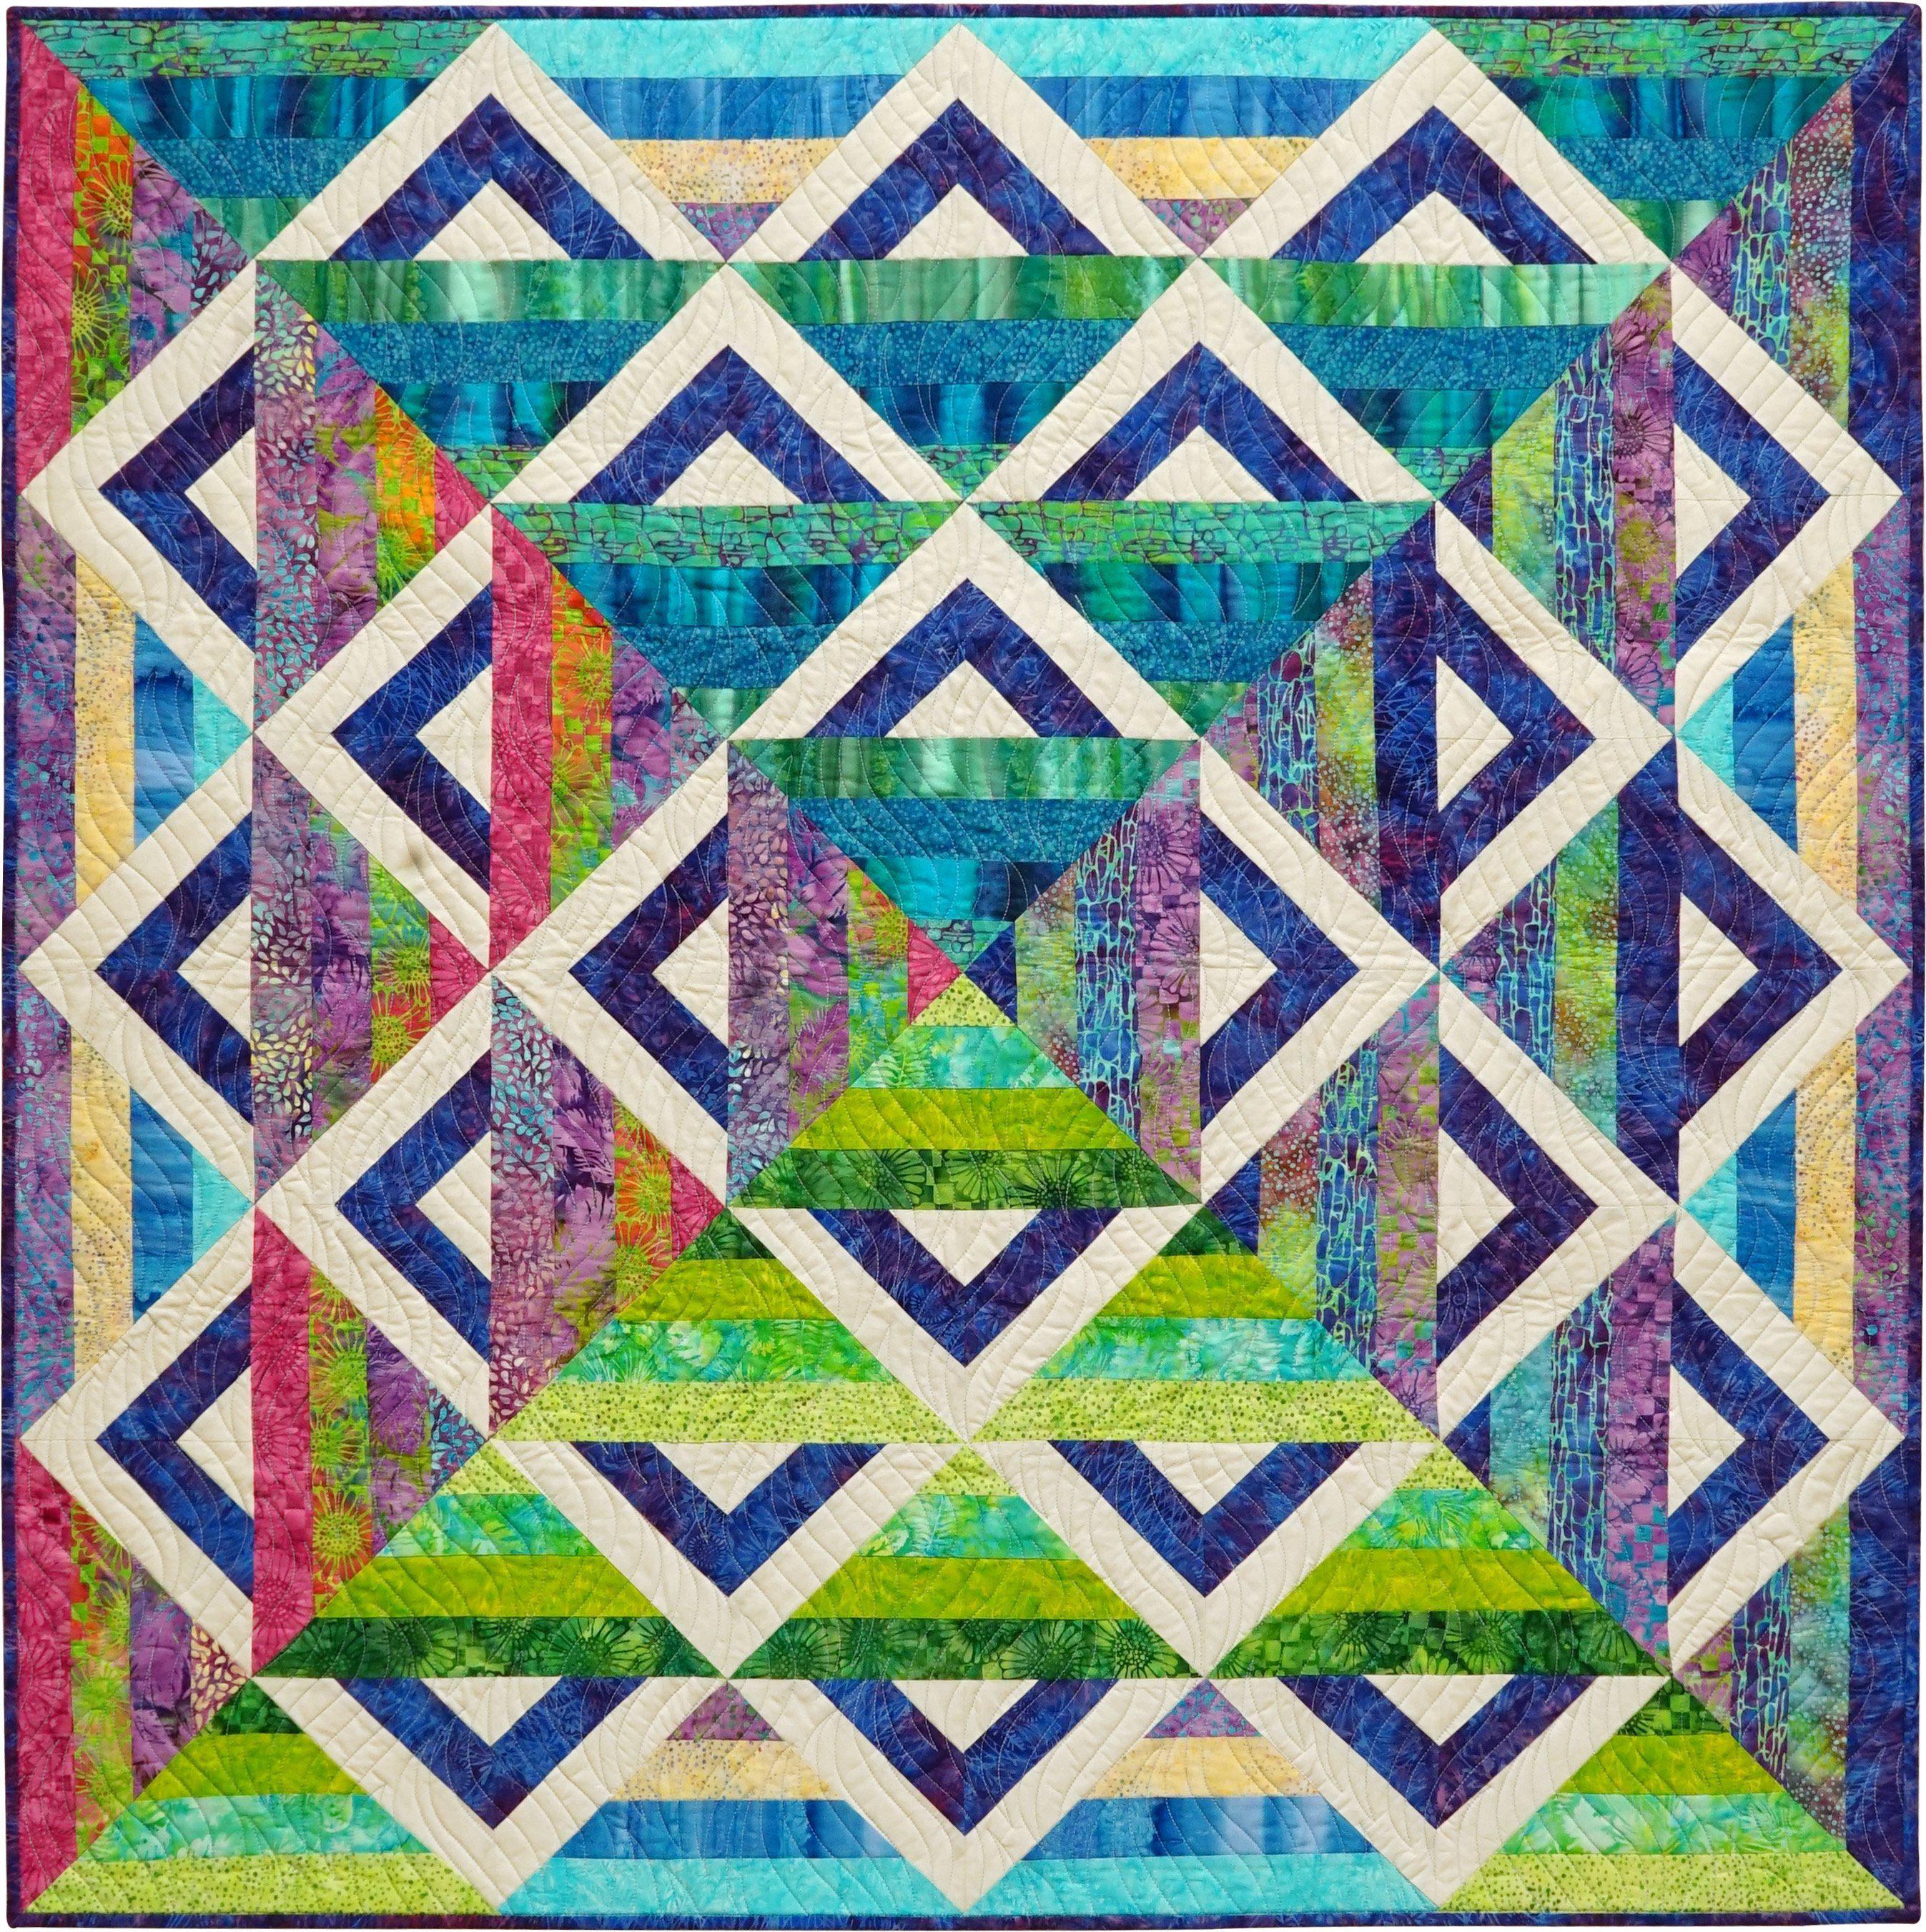 Paint Box Pattern-Colourwerx-My Favorite Quilt Store